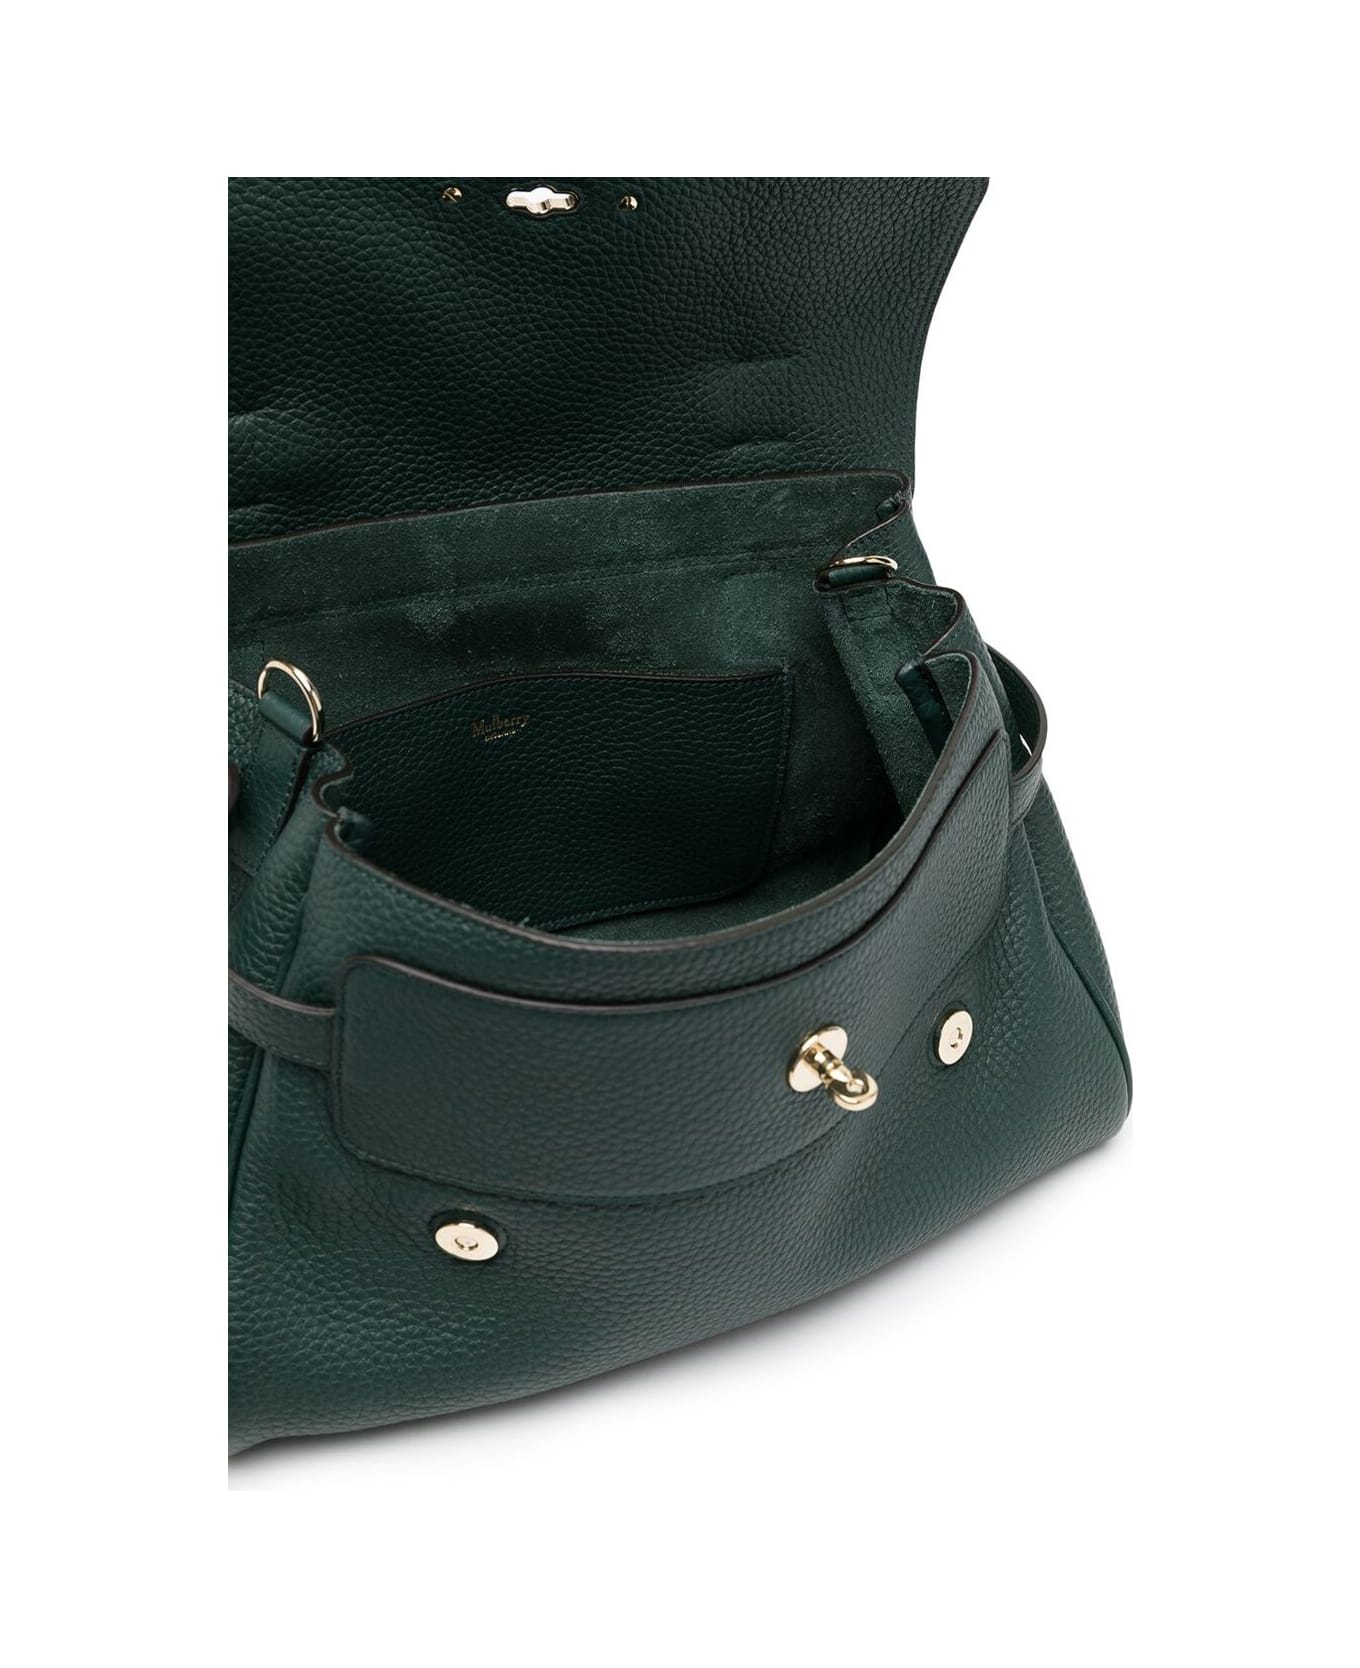 Mulberry Woman's Alexa Heavy Green Leather Handbag - Green トートバッグ